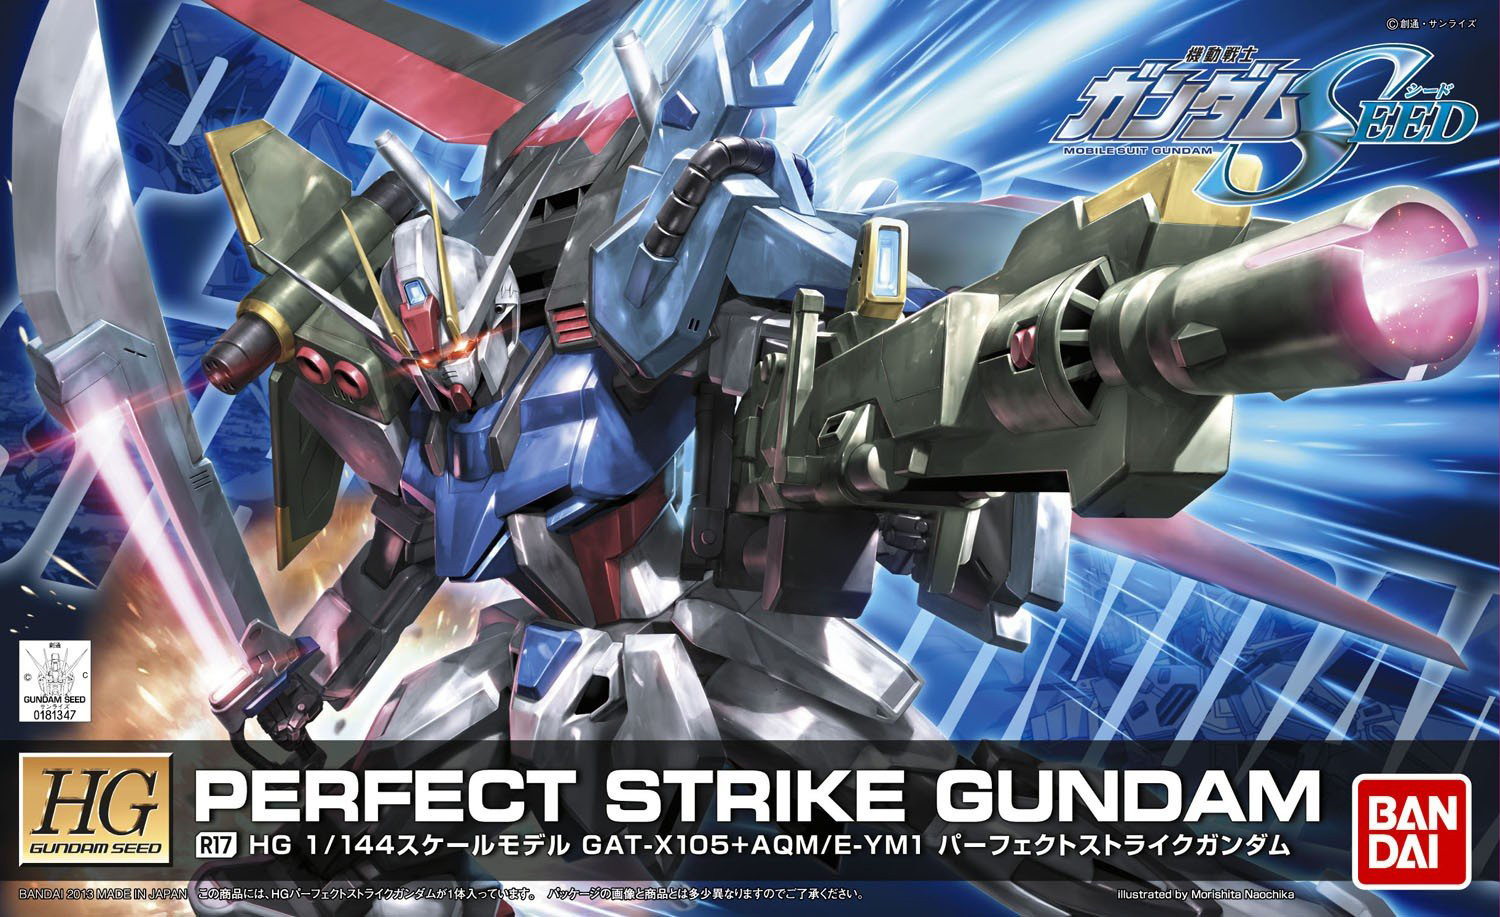 HG 1144 R 17 GAT X105 Perfect Strike Gundam Box Art Official